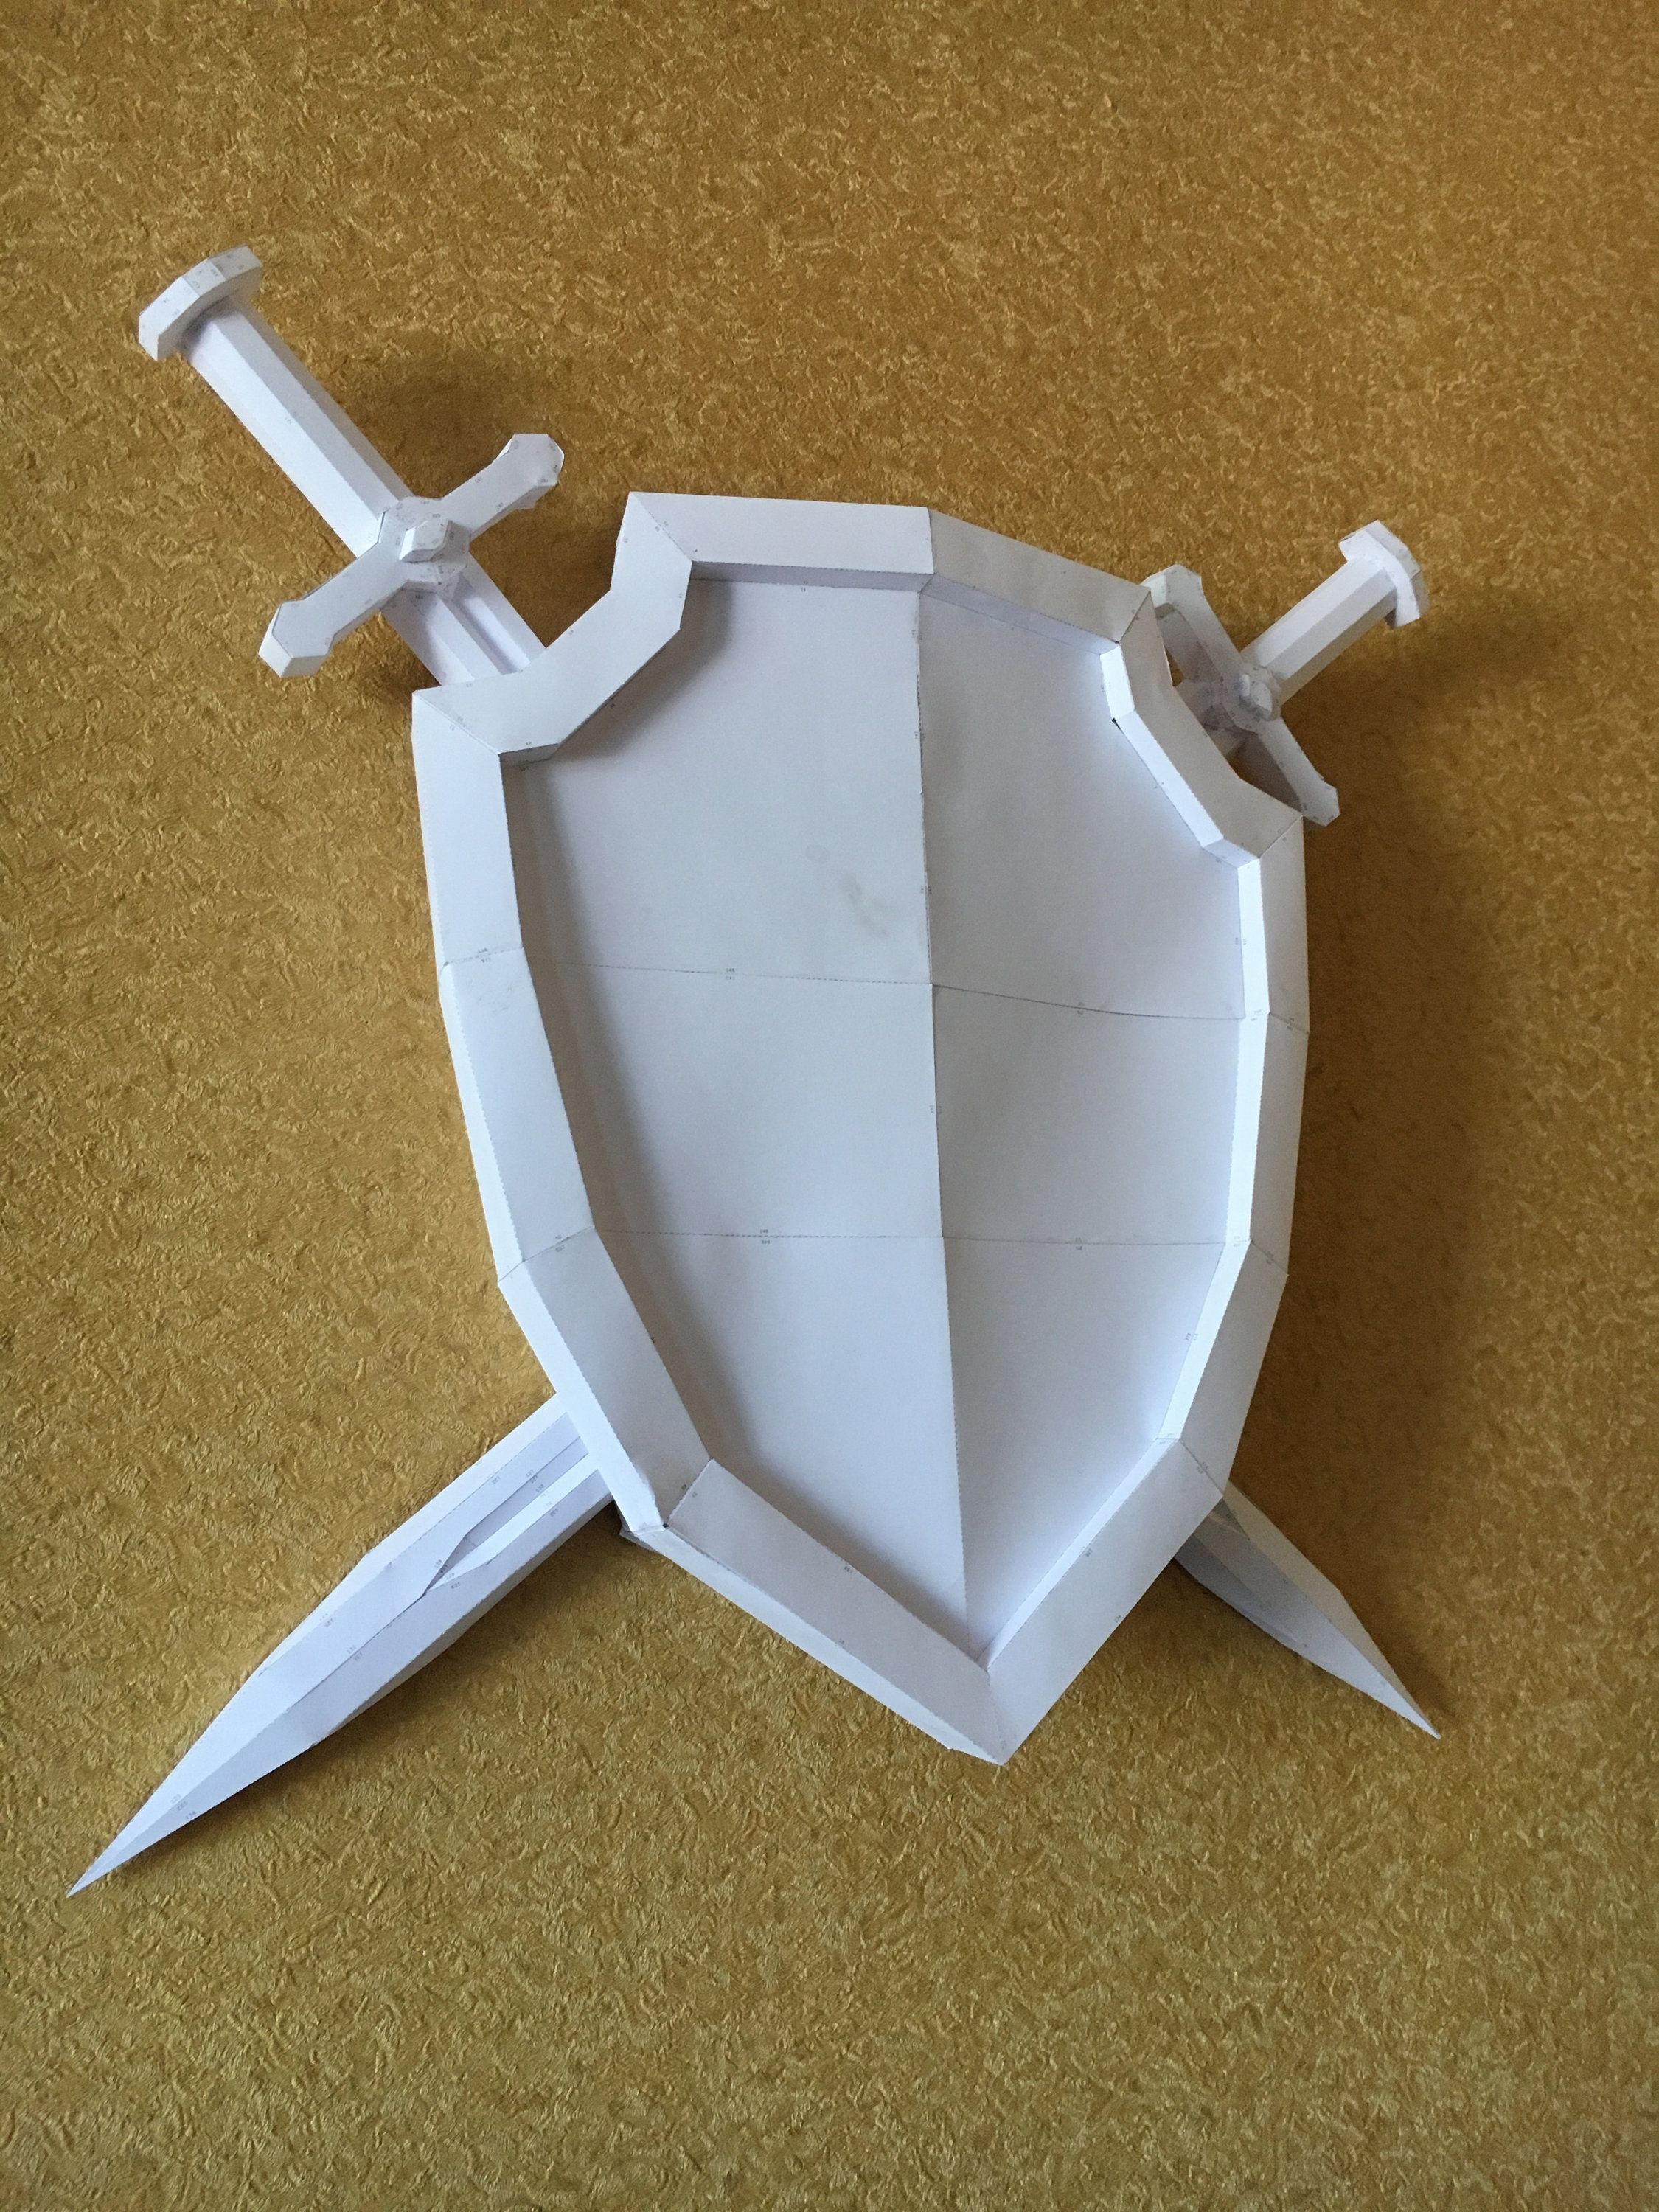 Papercraft Mask Sword Shield Diy Papercraft Model ÐÑÐ¼Ð°Ð¶Ð½ÑÐµ Ð¸Ð·Ð´ÐµÐ Ð¸Ñ